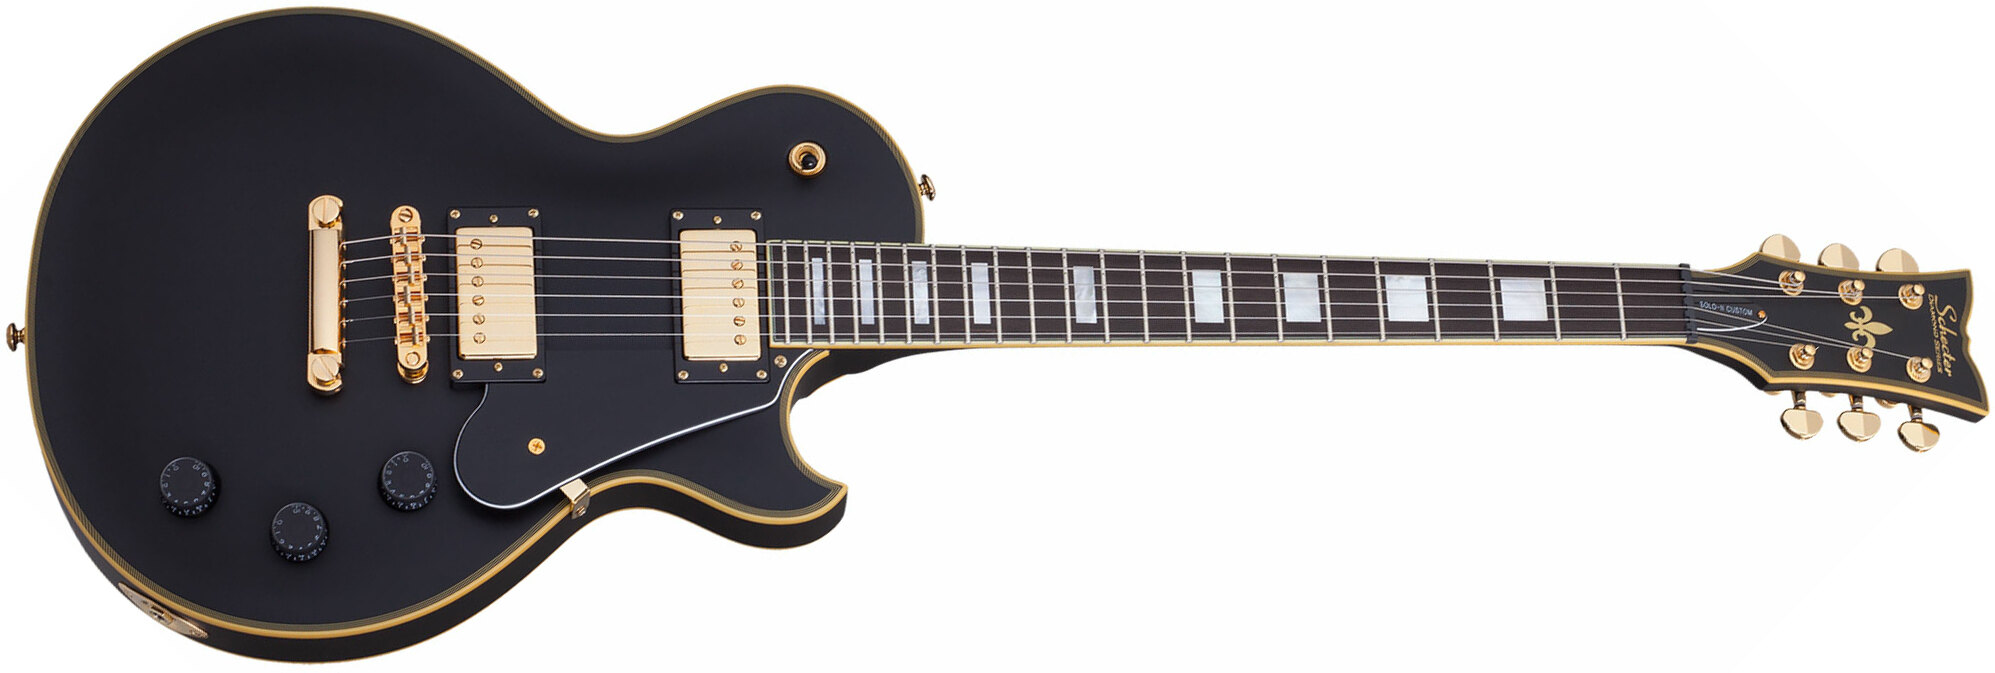 Schecter Solo-ii Custom 2h Ht Eb - Aged Black Satin - Single cut electric guitar - Main picture